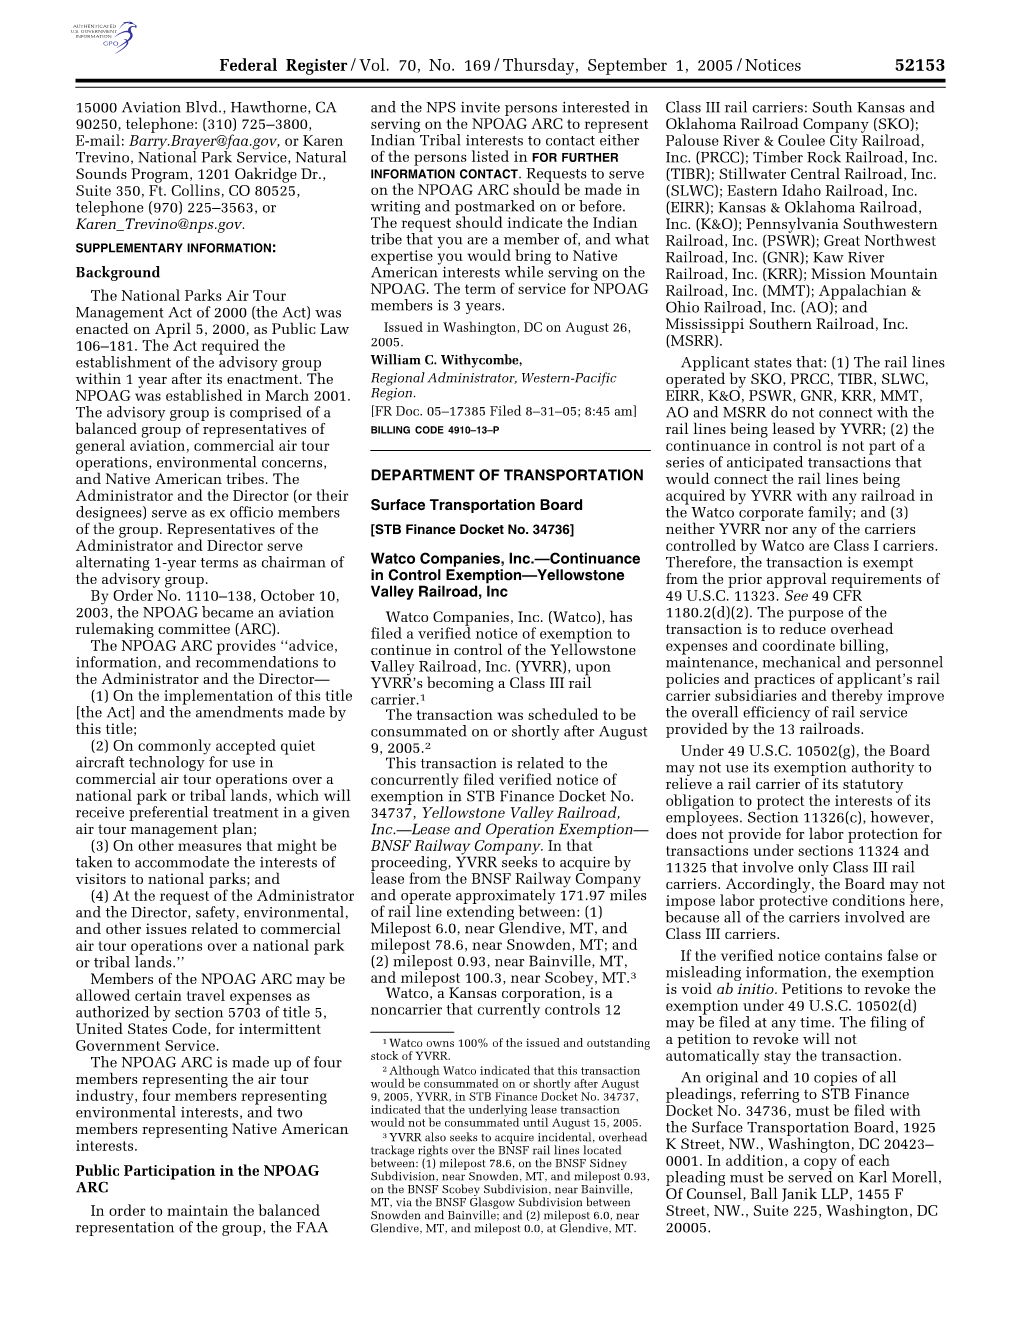 Federal Register/Vol. 70, No. 169/Thursday, September 1, 2005